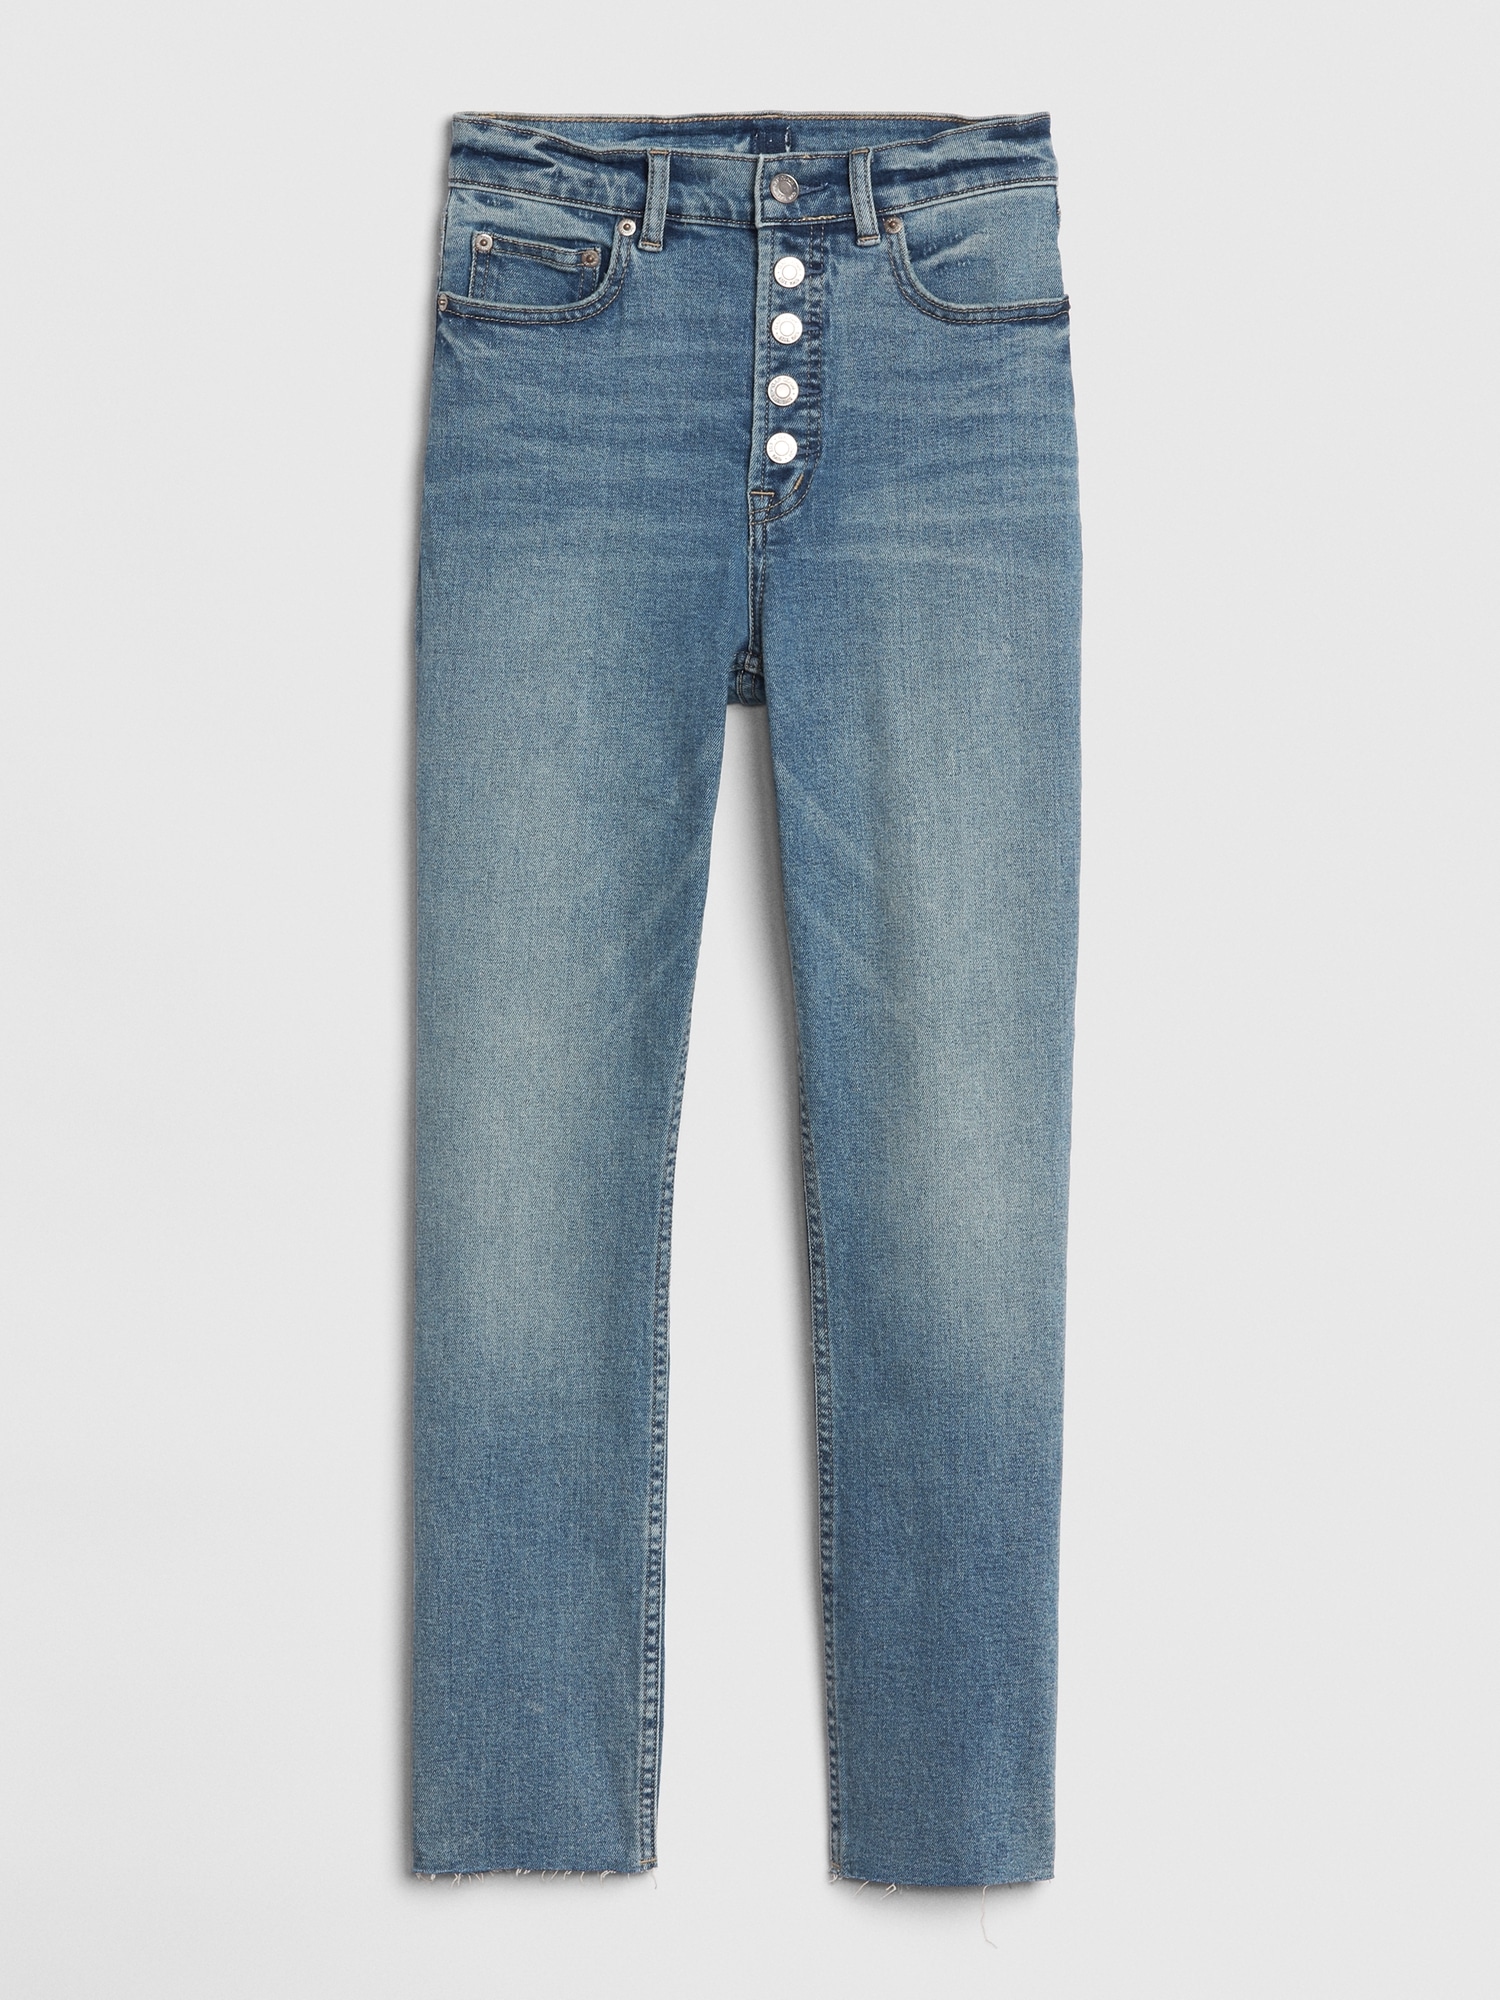 gap jeans canada